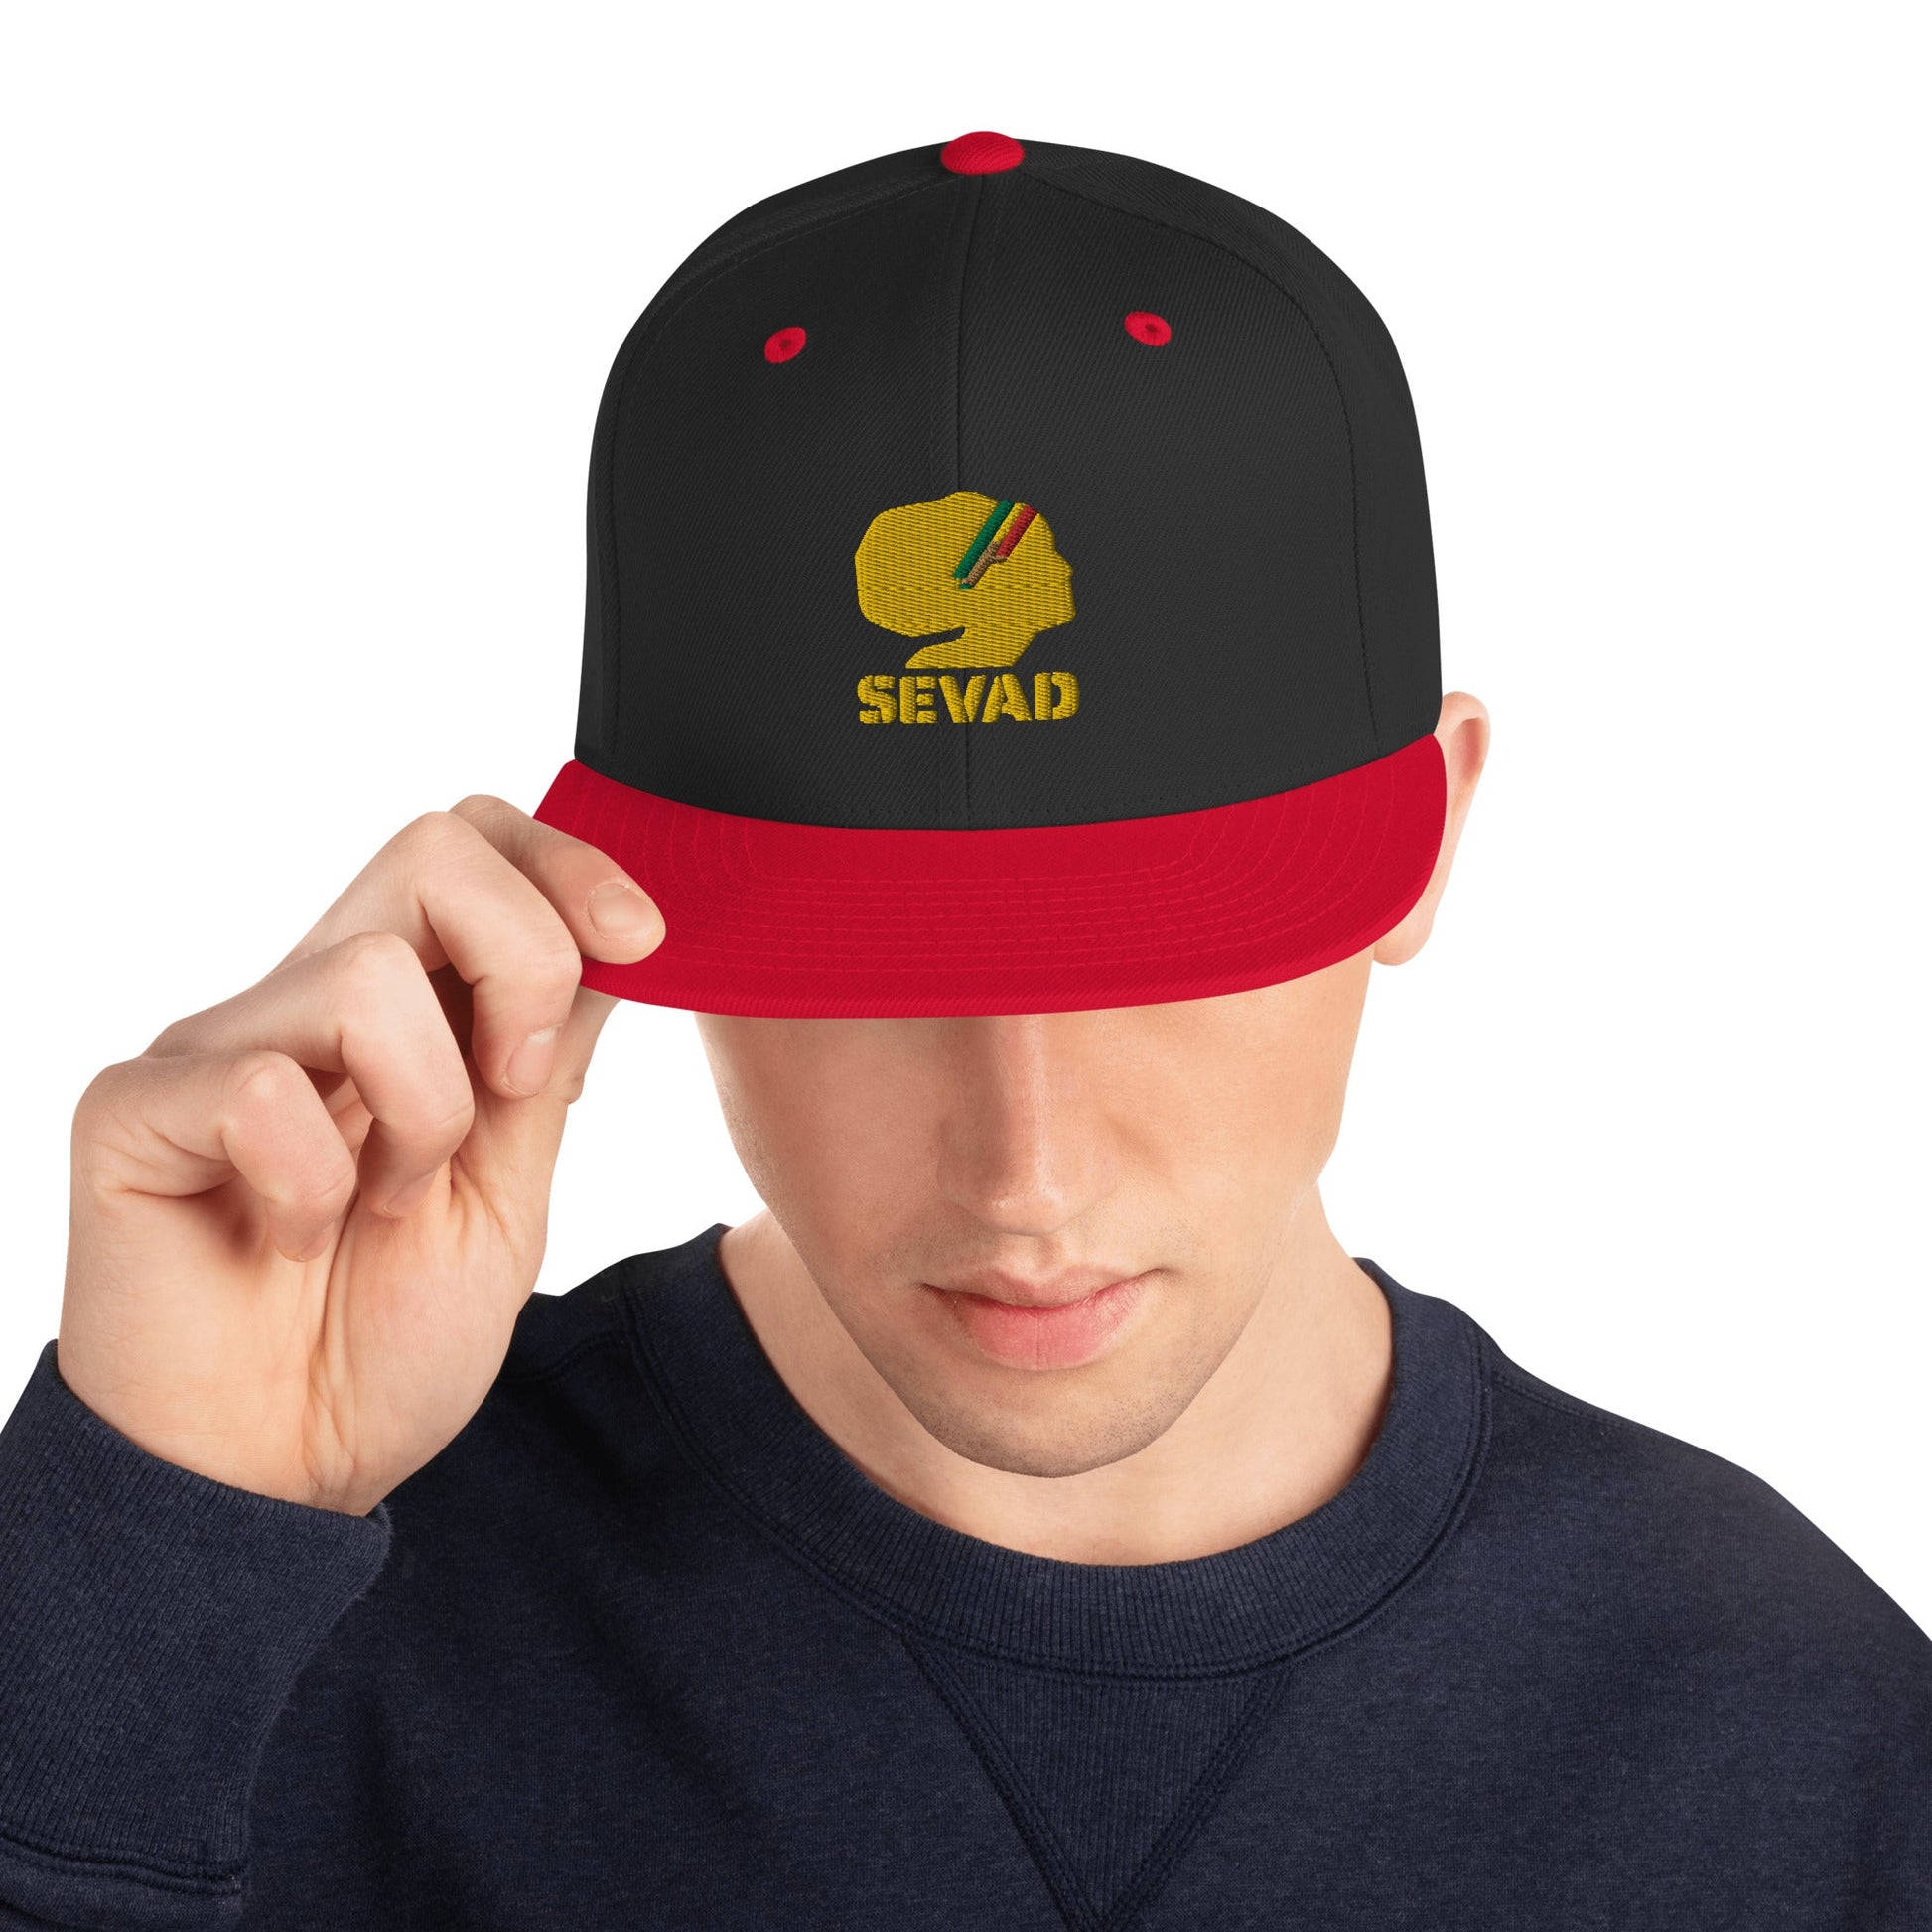 SEVAD Snapback Hat - SEVAD MUSIC HOUSE - Snapback Hat - SEVAD MUSIC HOUSE - 7123262_4794 - Black/ Red - - SEVAD Snapback Hat